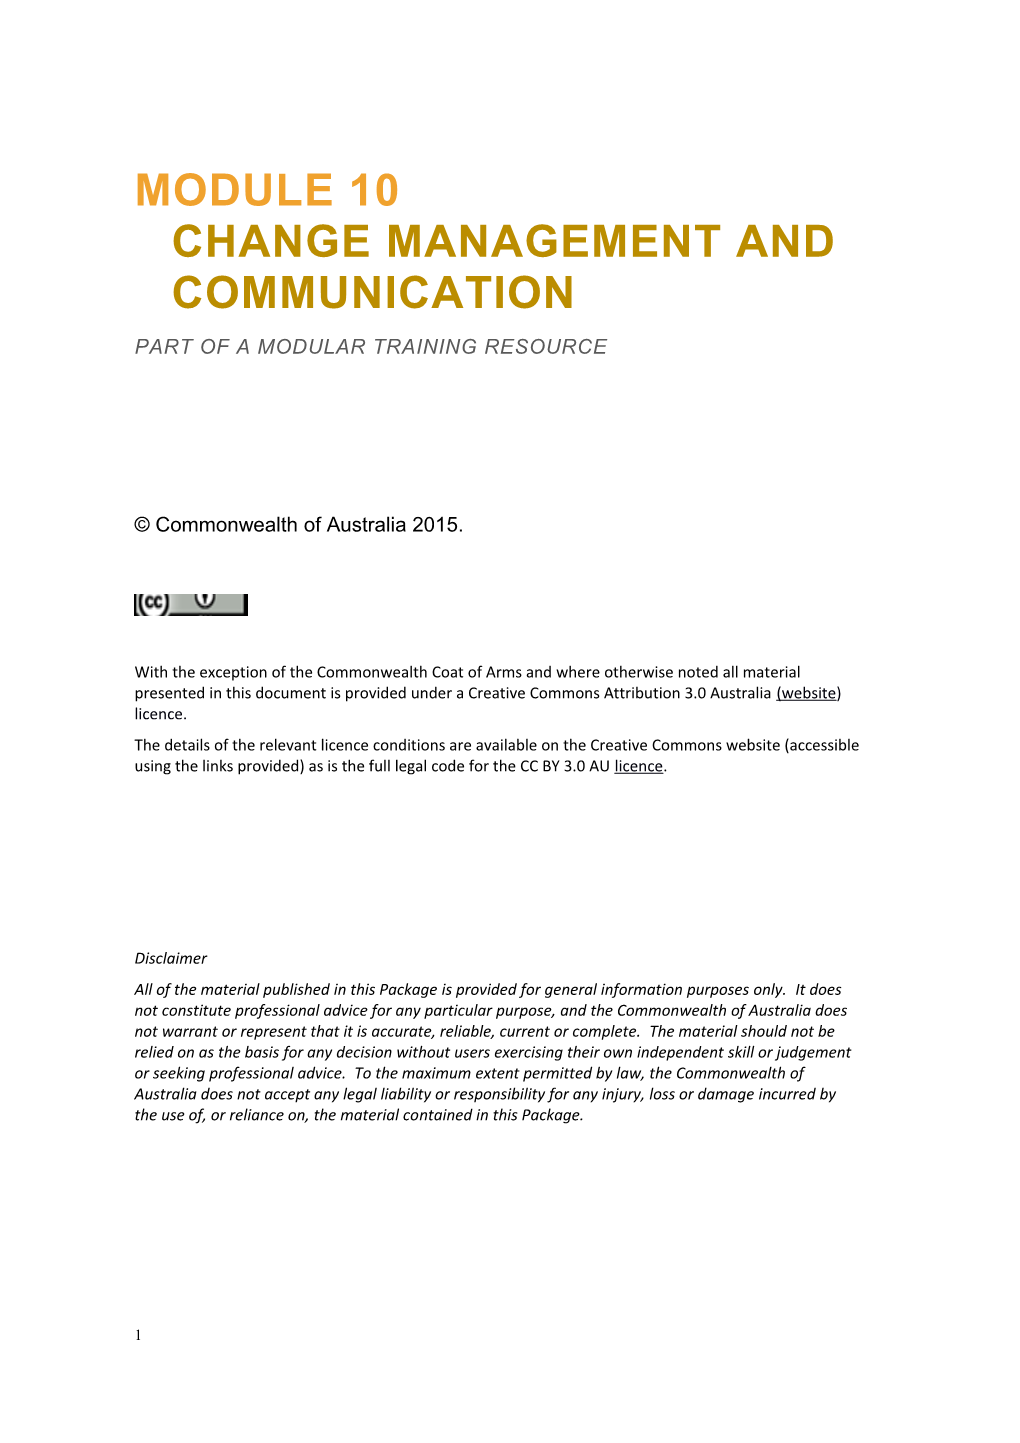 Module 10Change Management and Communication